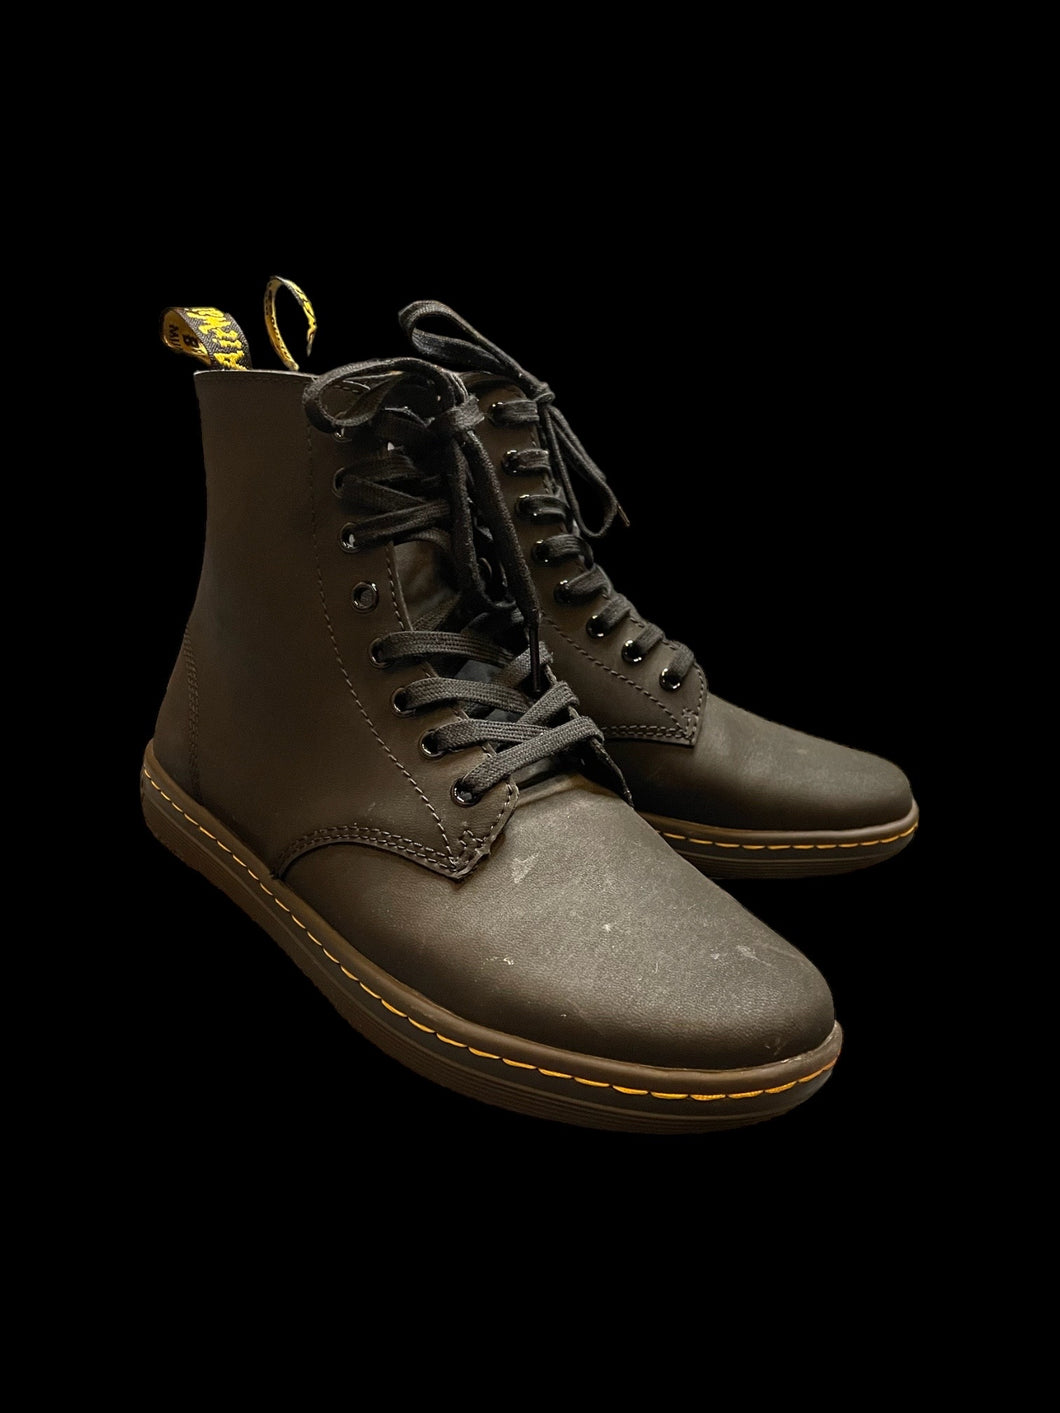 9M/10W Black leather Dr. Martens lace-up boots